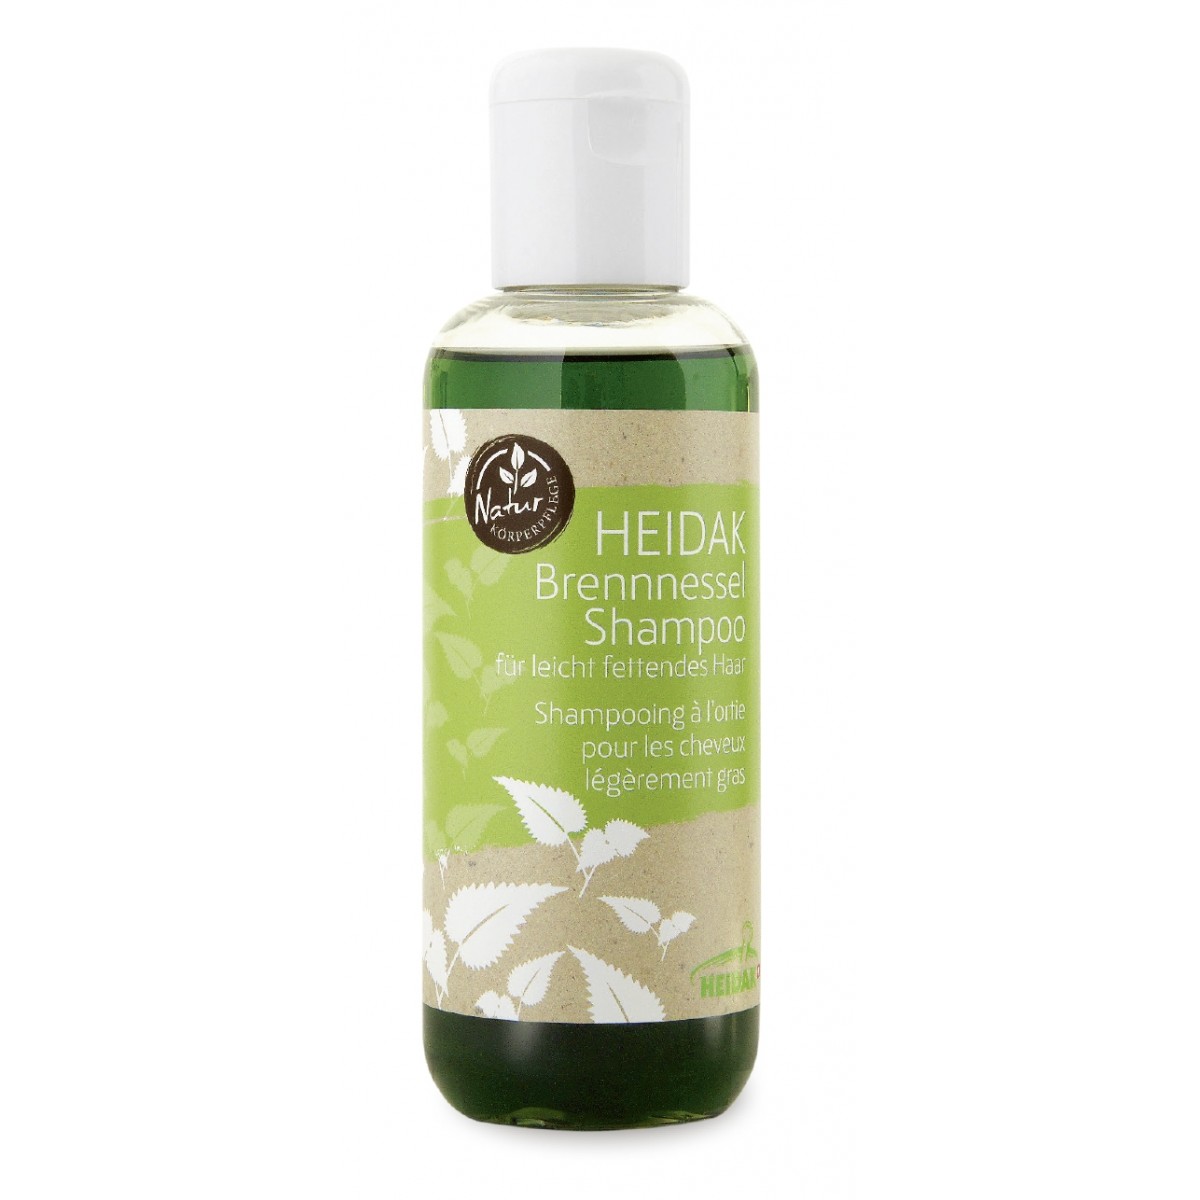 Heidak Brennessel Shampoo 250ml